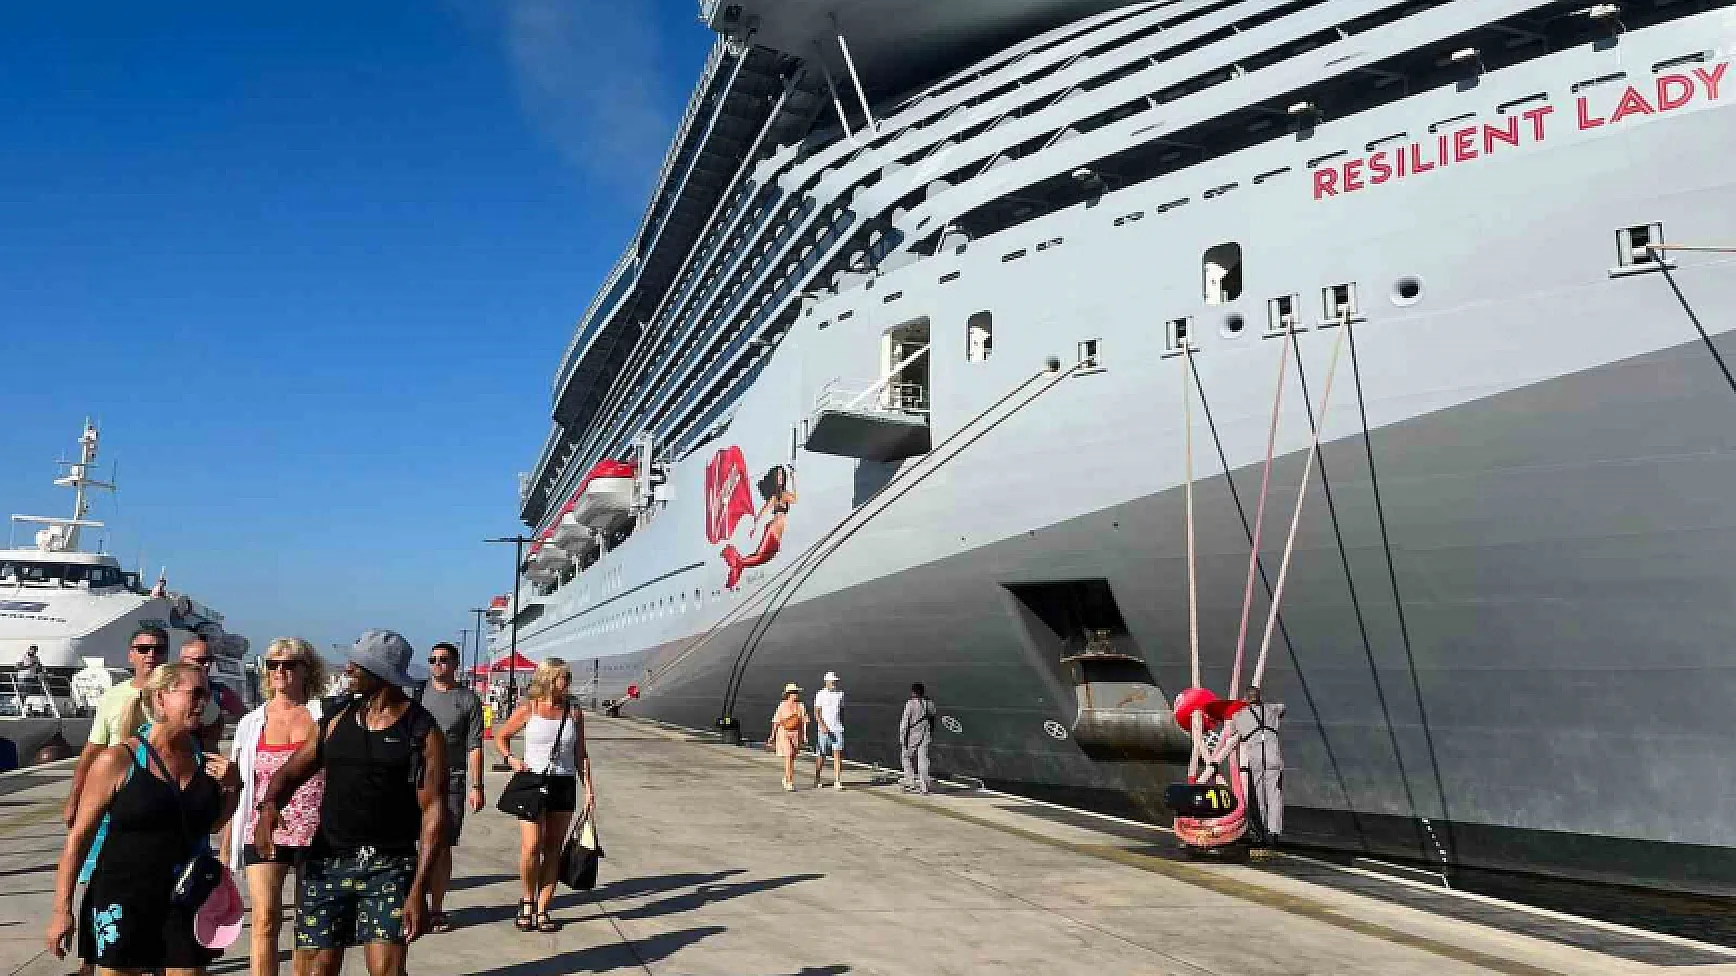 Dev yolcu gemisi 2 bin 300 yolcuyla Bodrum’a geldi